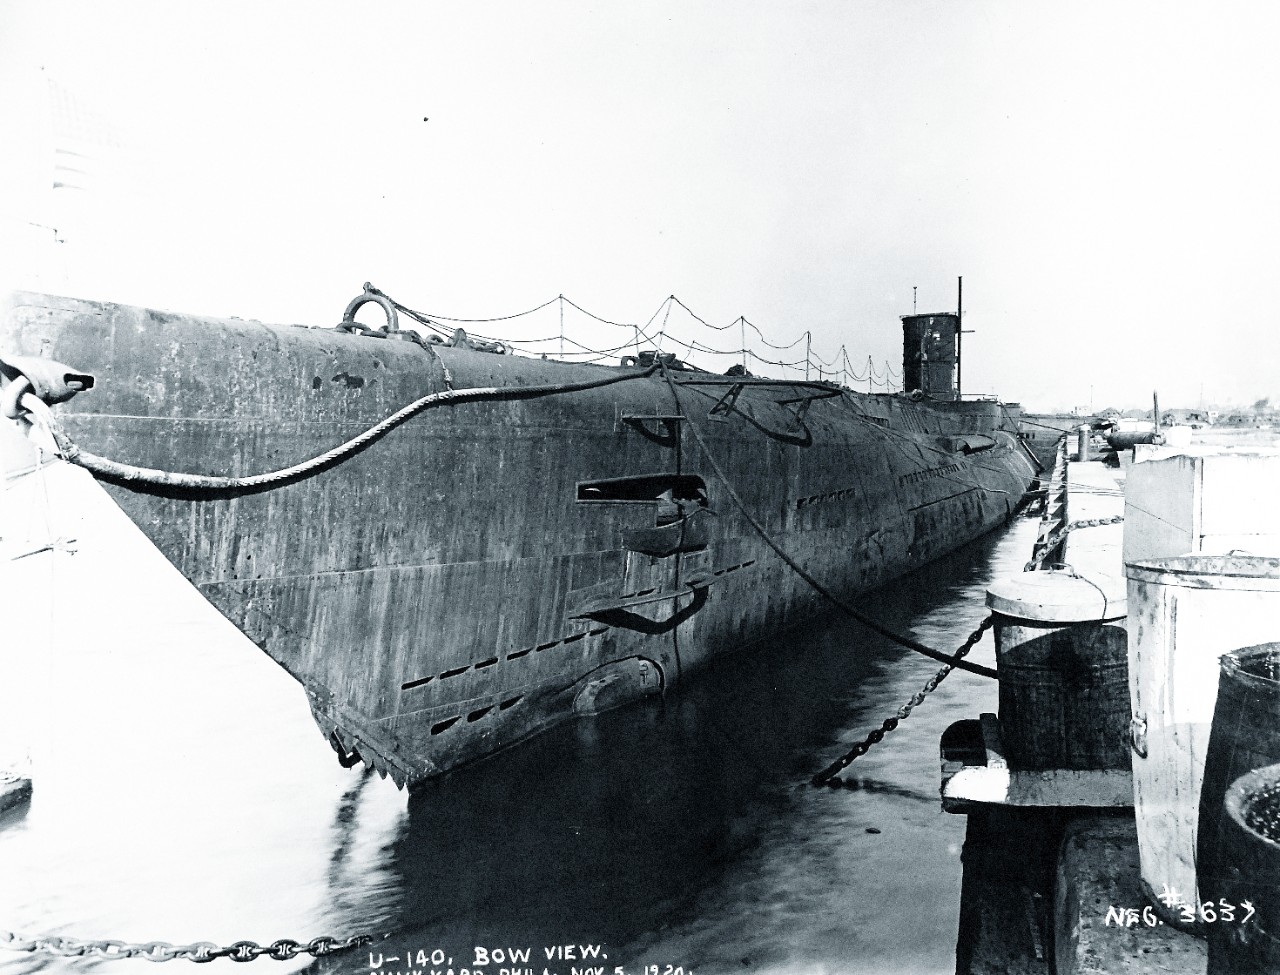 <p>19-N-3637: German submarine, U-140, bow view, Philadelphia Navy Yard, Philadelphia, Pennsylvania, November 5, 1920. U-140 was sunk in the summer 1921 in aerial bombardment tests.&nbsp;</p>
